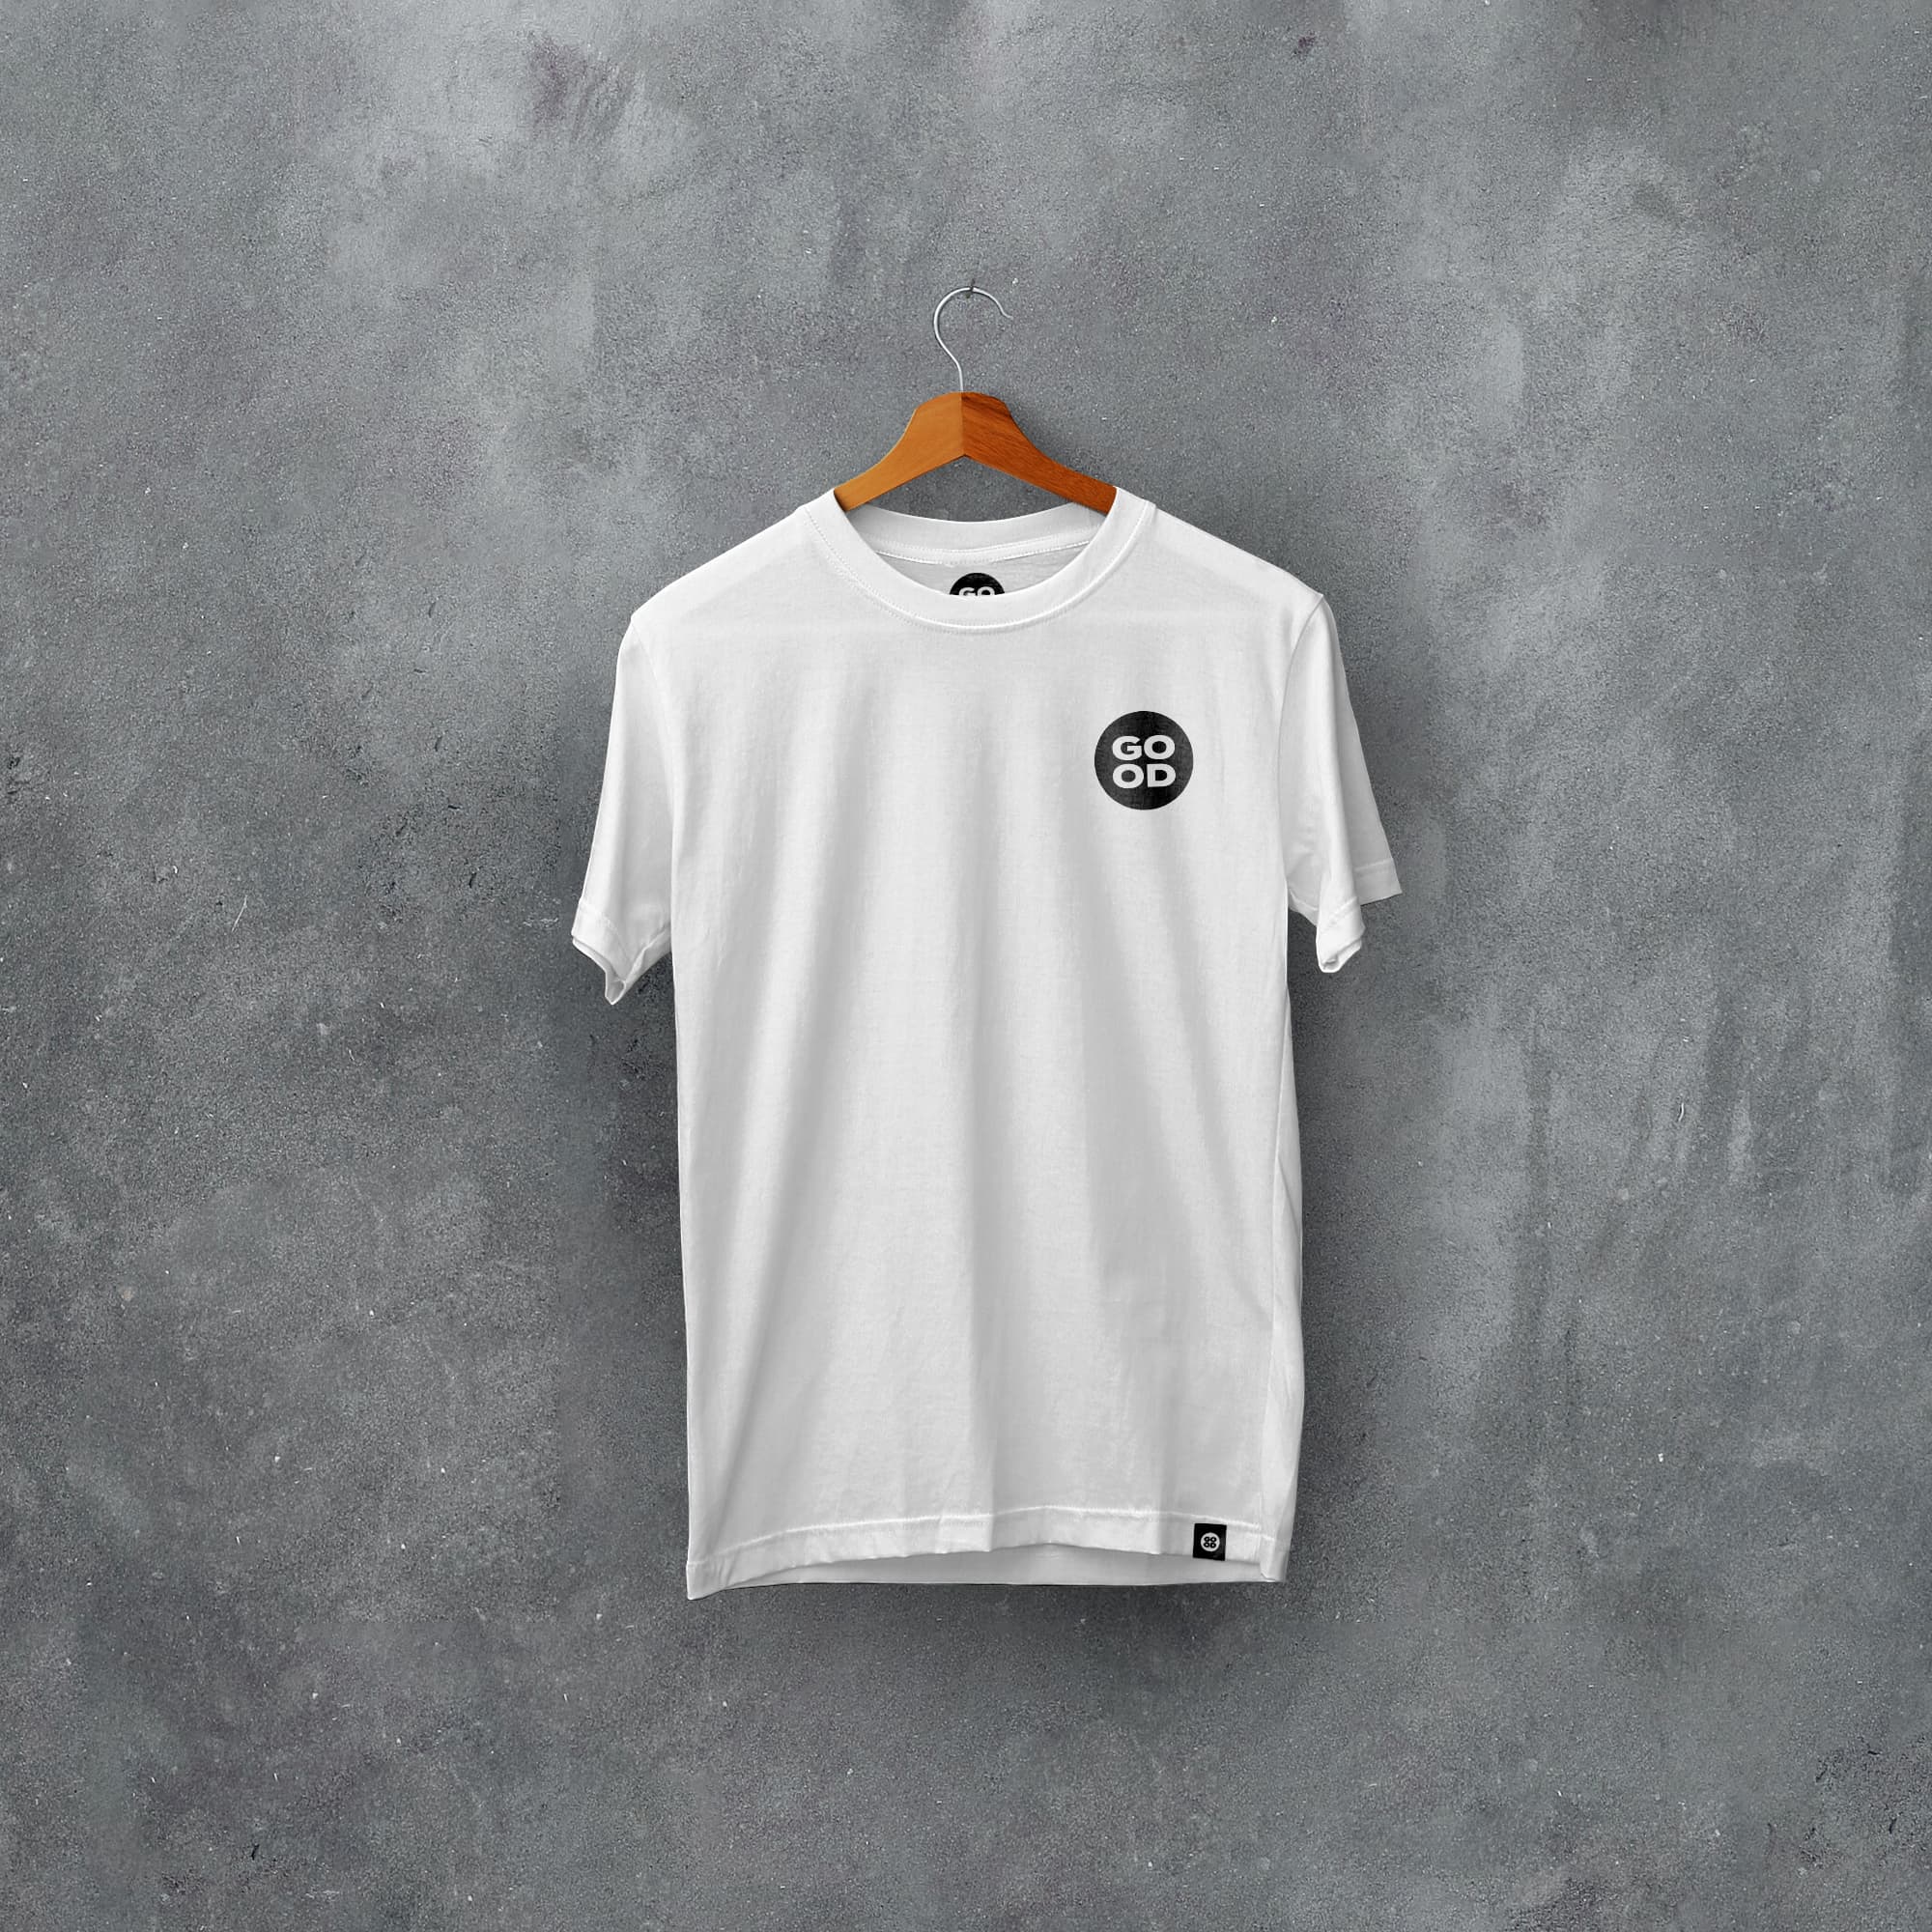 Barcelona Classic Kits Football T-Shirt